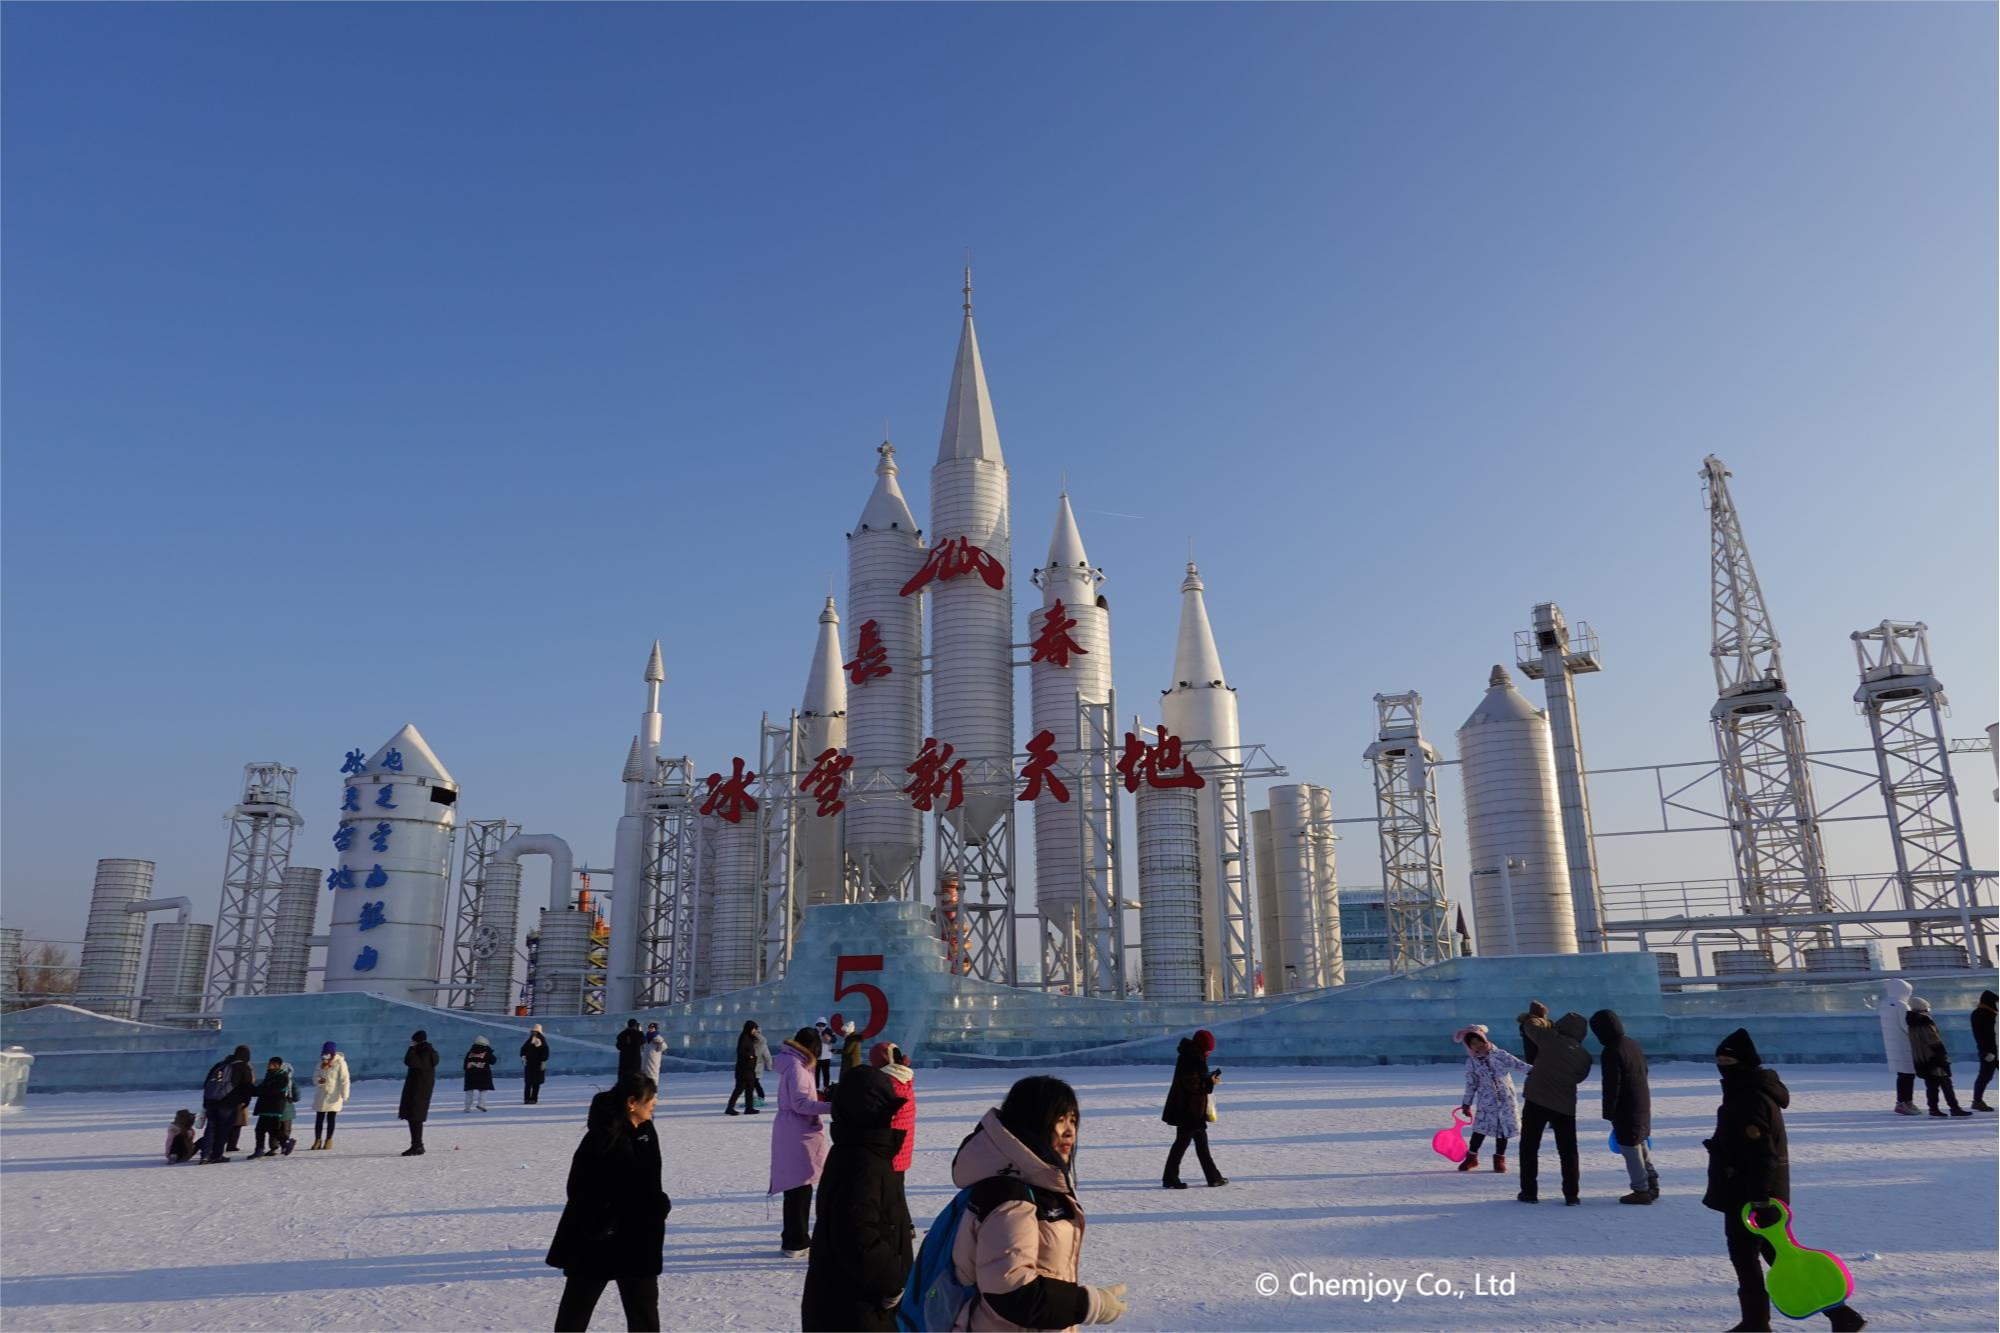 CHEMJOY Team Embrace Winter Wonderland at Changchun Ice and Snow World